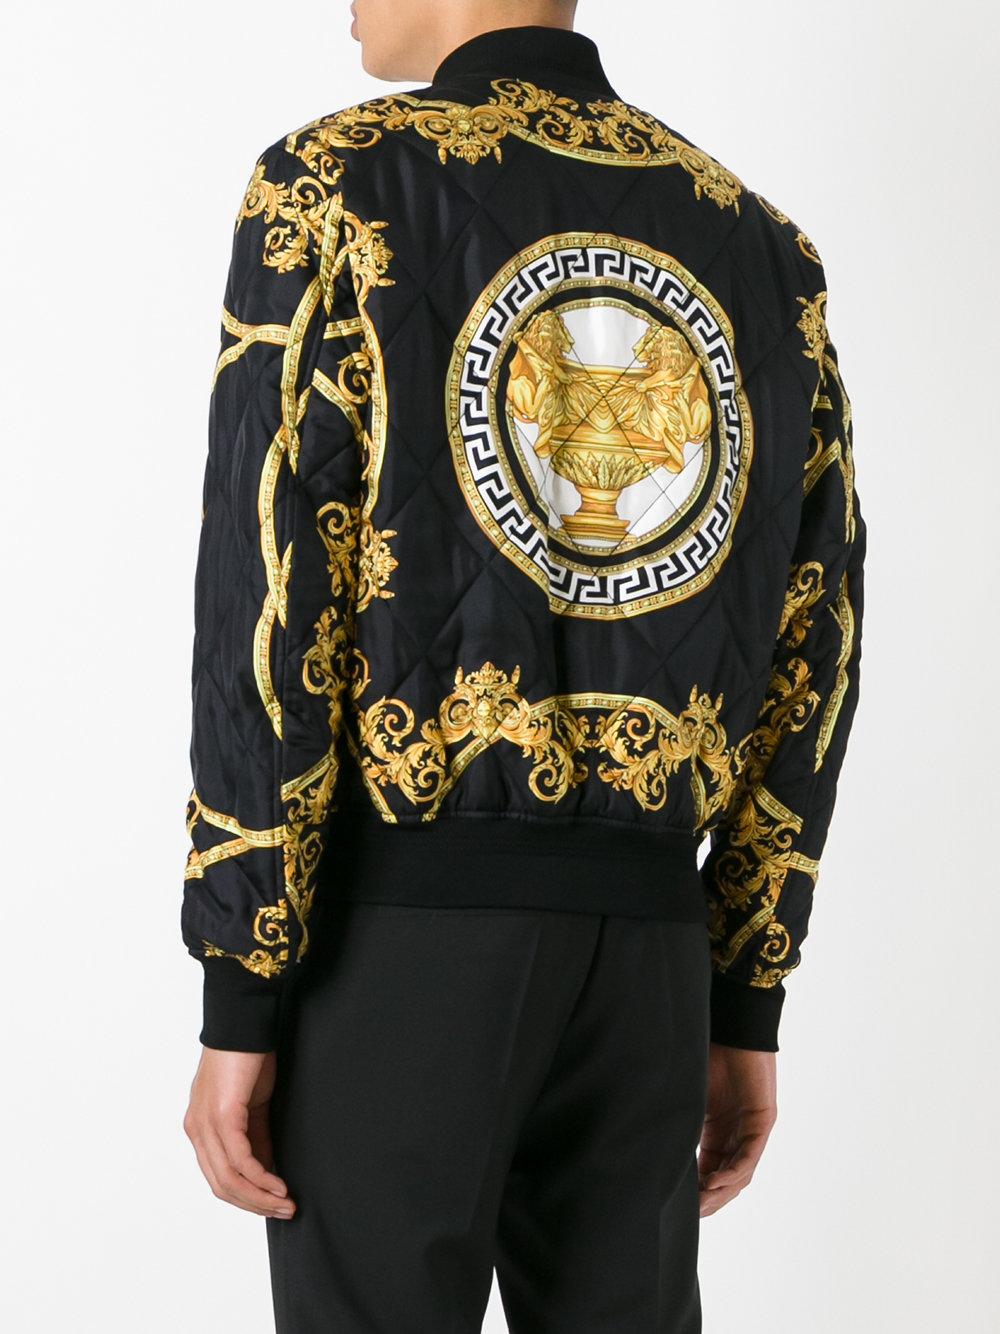 Versace Cotton Lenticular Foulard Bomber Jacket in Black for Men - Lyst